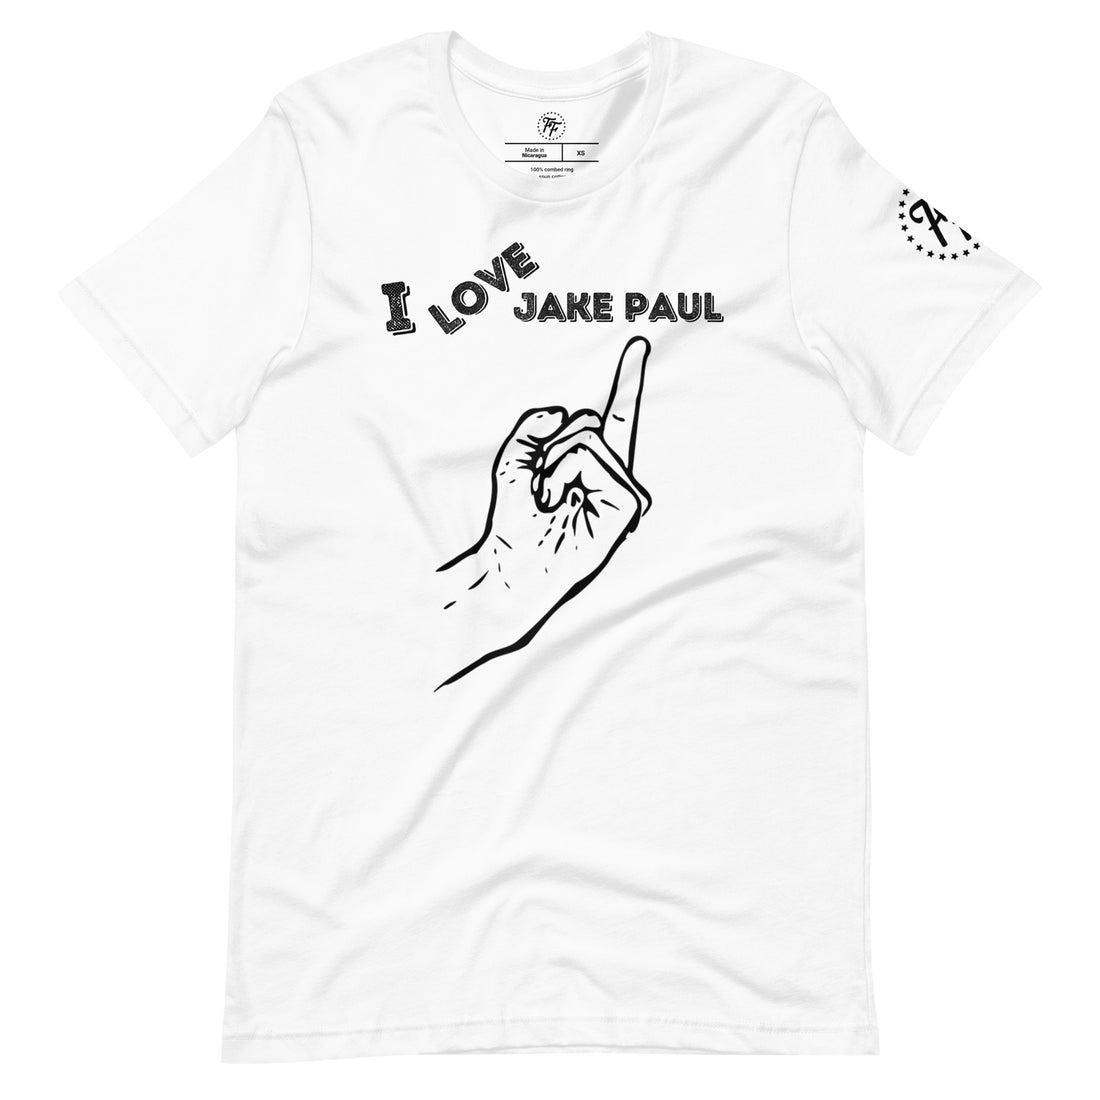 Unofficial Tyron Woodley "I Love Jake Paul" Shirt